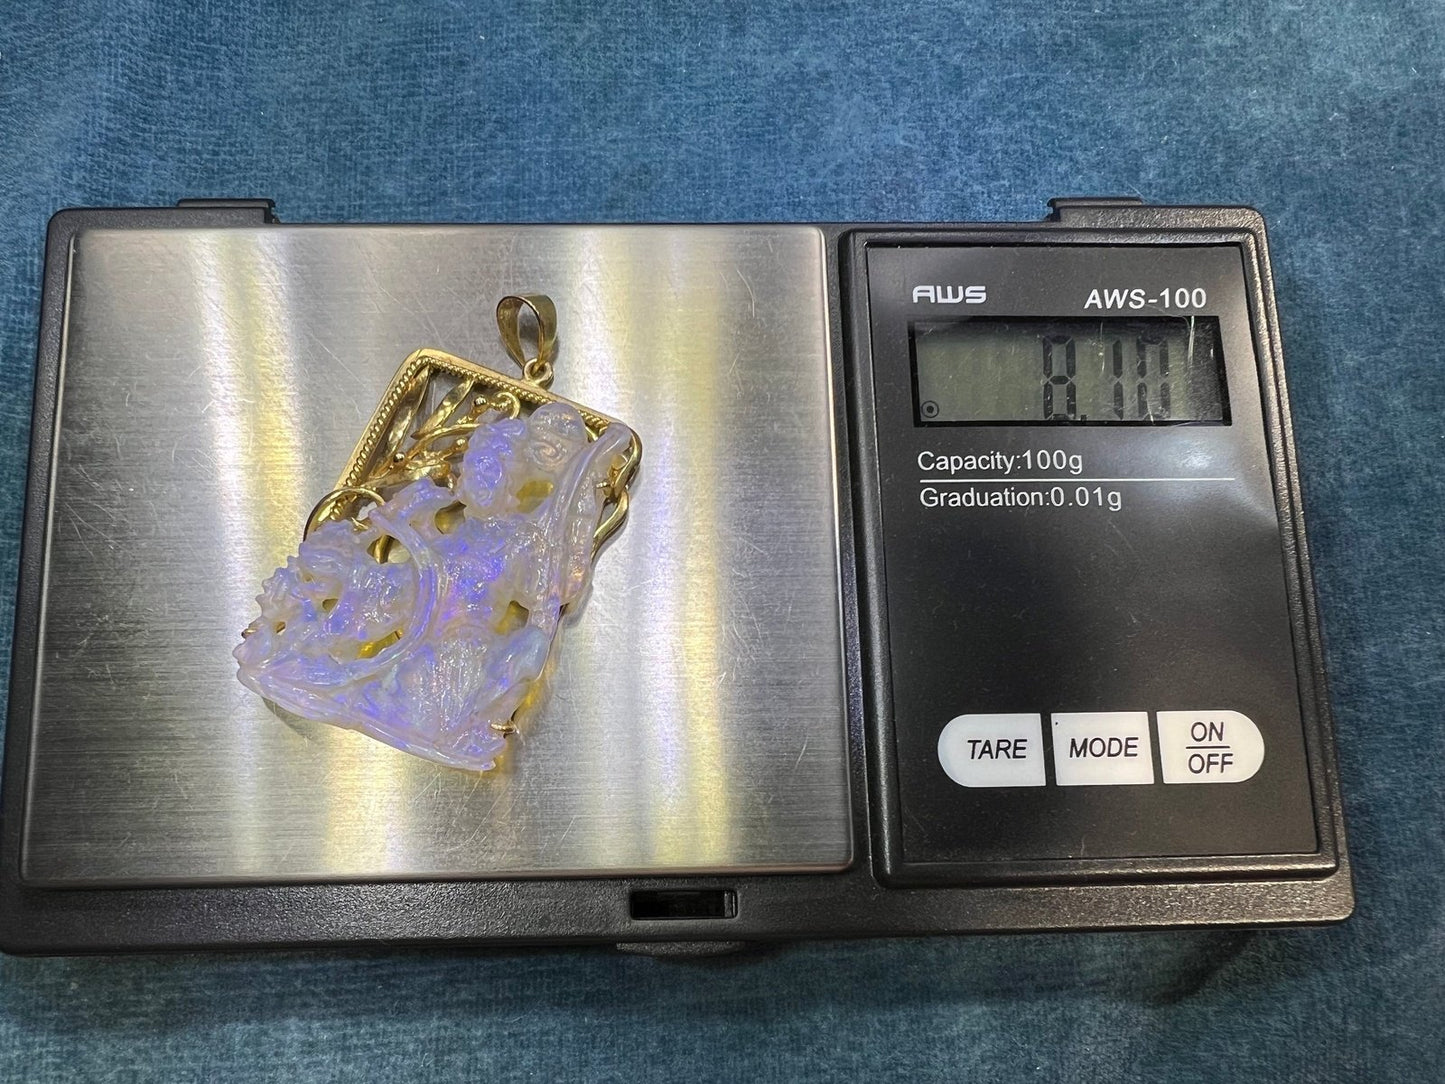 14k Gold Carved Australian Opal Guanyin Pendant. 1.7"+ 8g *Video*